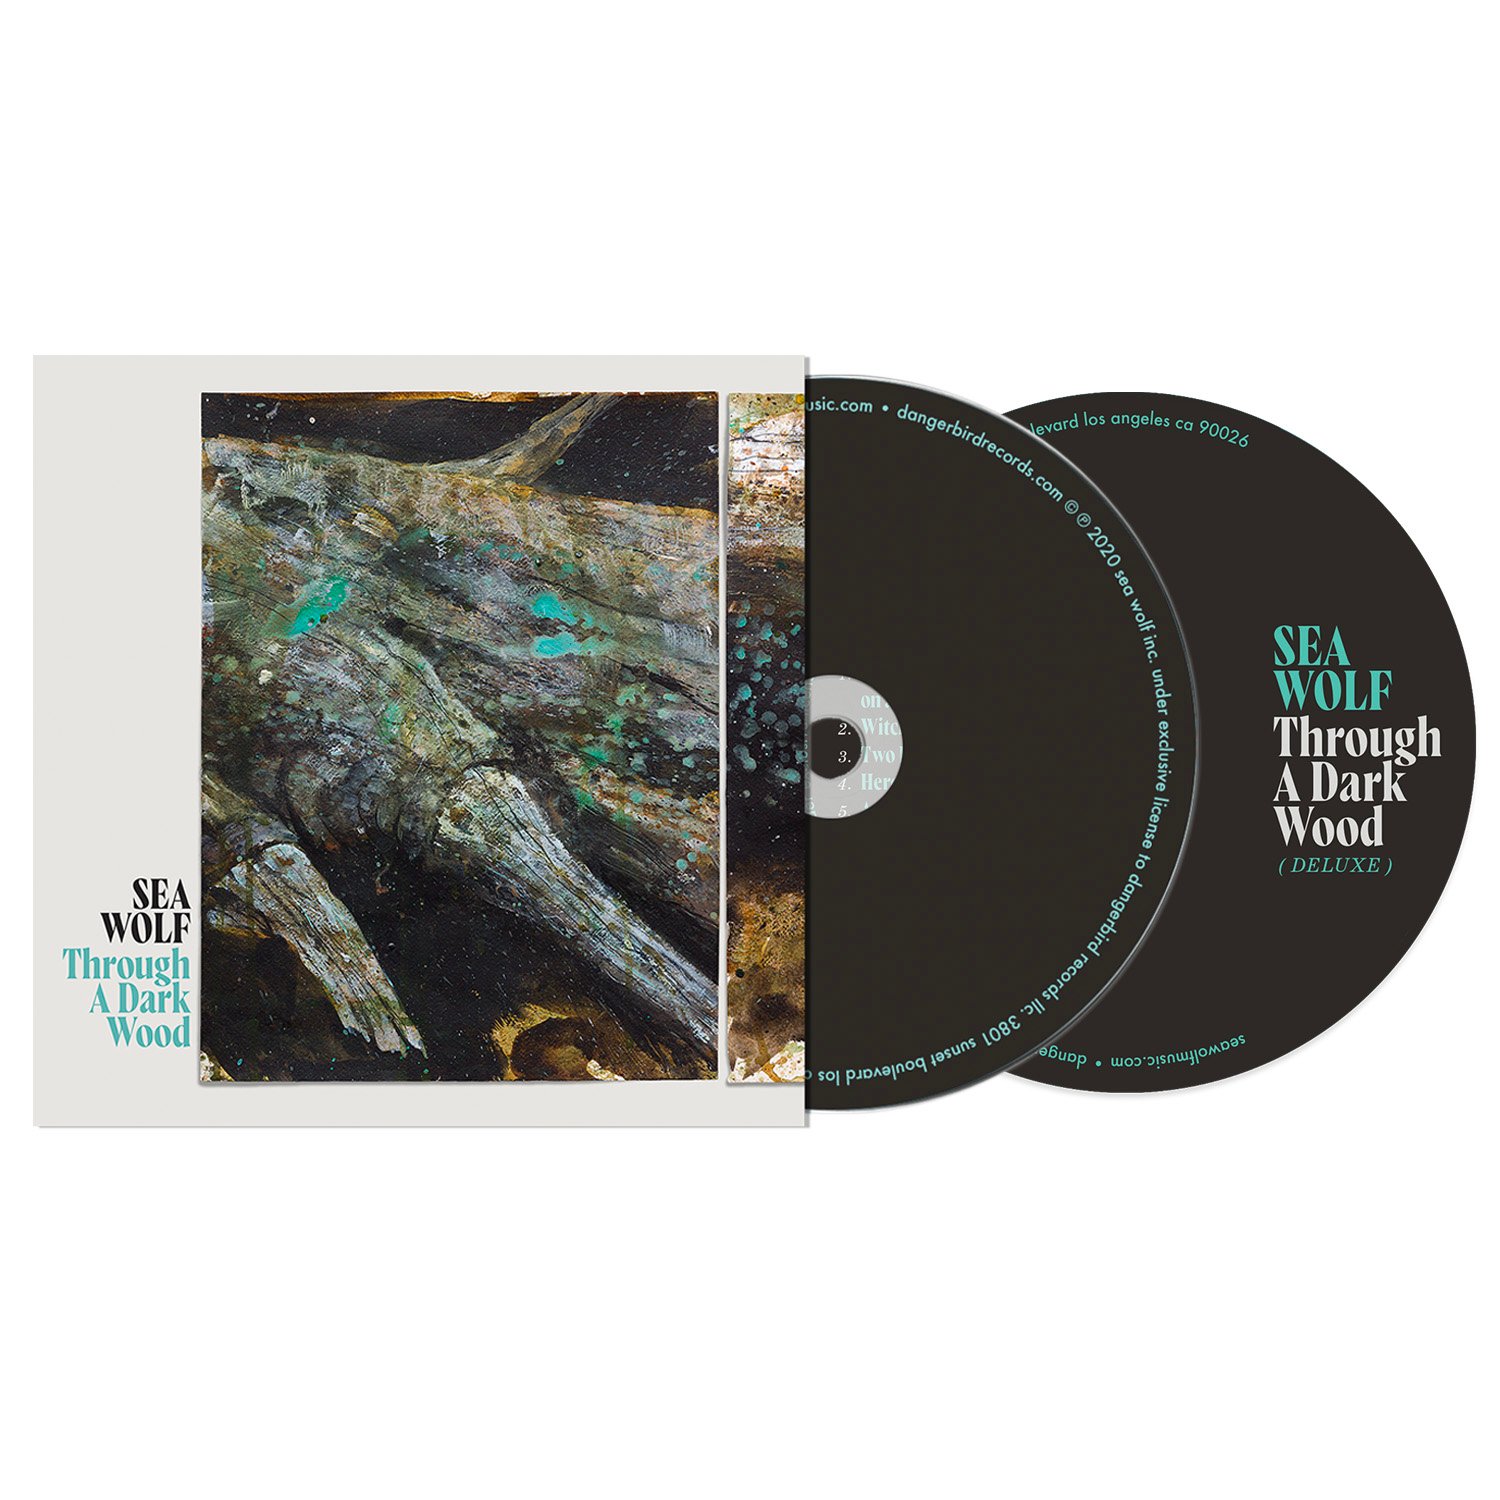 Image of Through a Dark Wood (Deluxe) – CD w/Deluxe CD